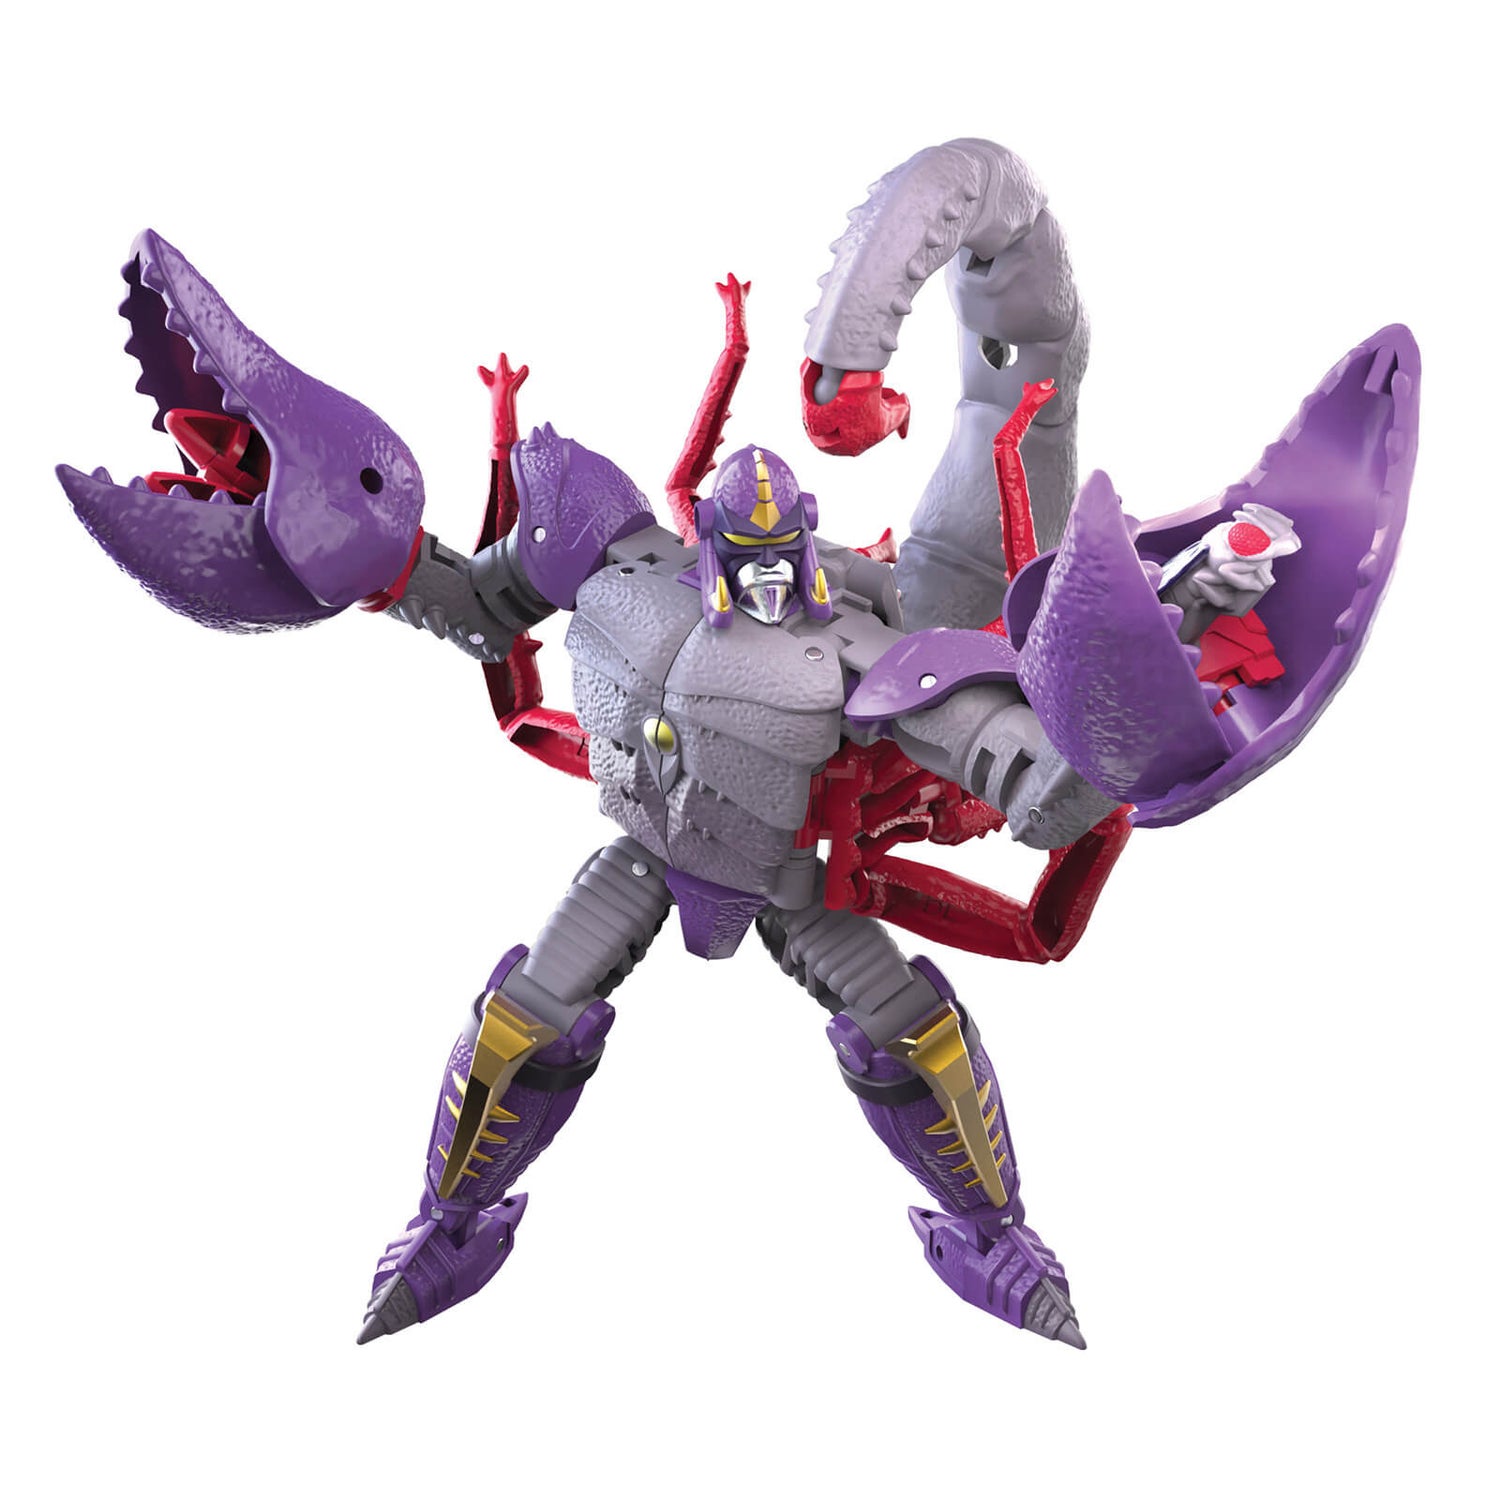 Hasbro Transformers Generations War for Cybertron: Kingdom Deluxe WFC-K23 Predacon Scorponok Action Figure